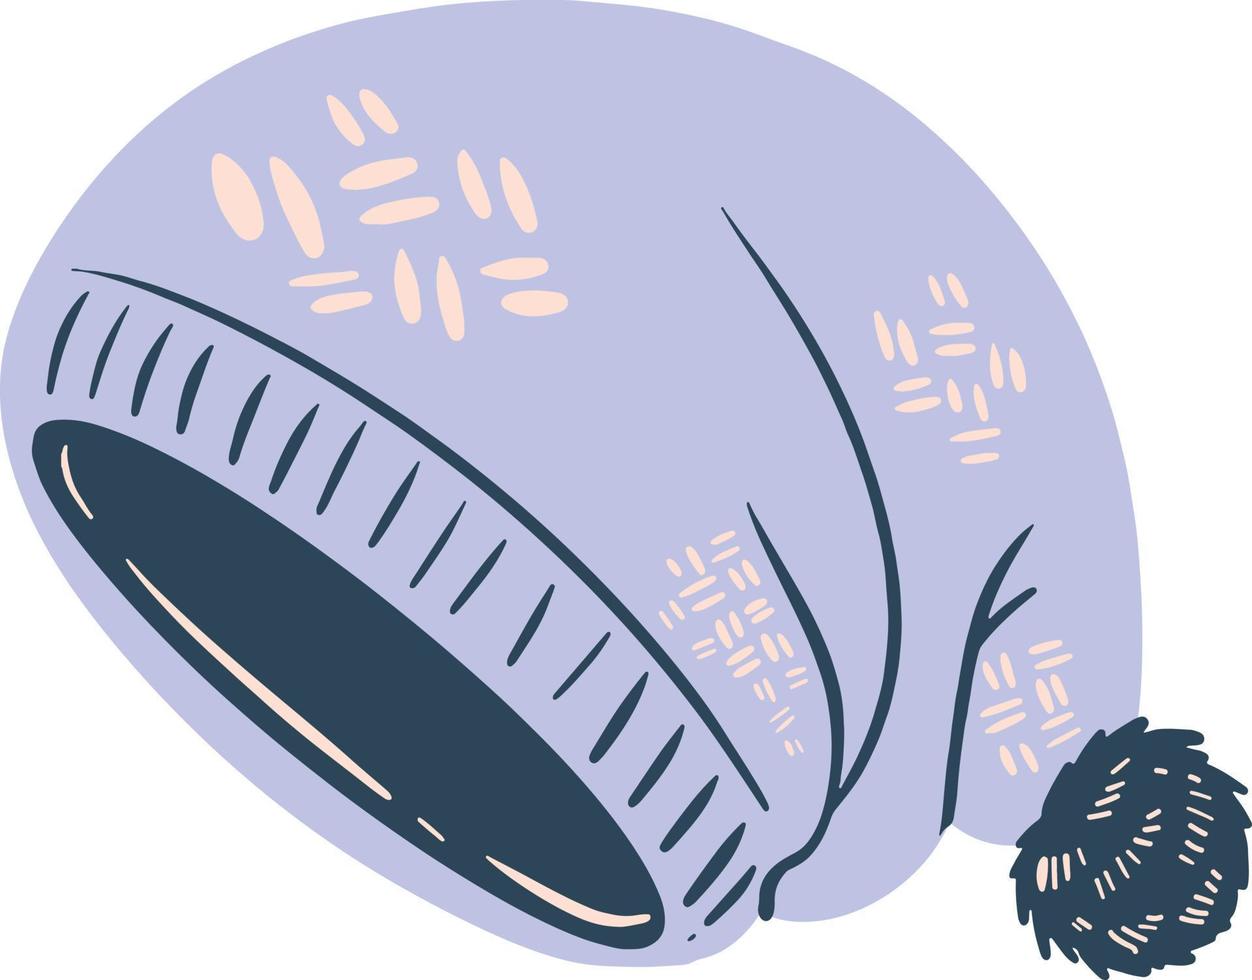 A warm winter beanie illustration vector